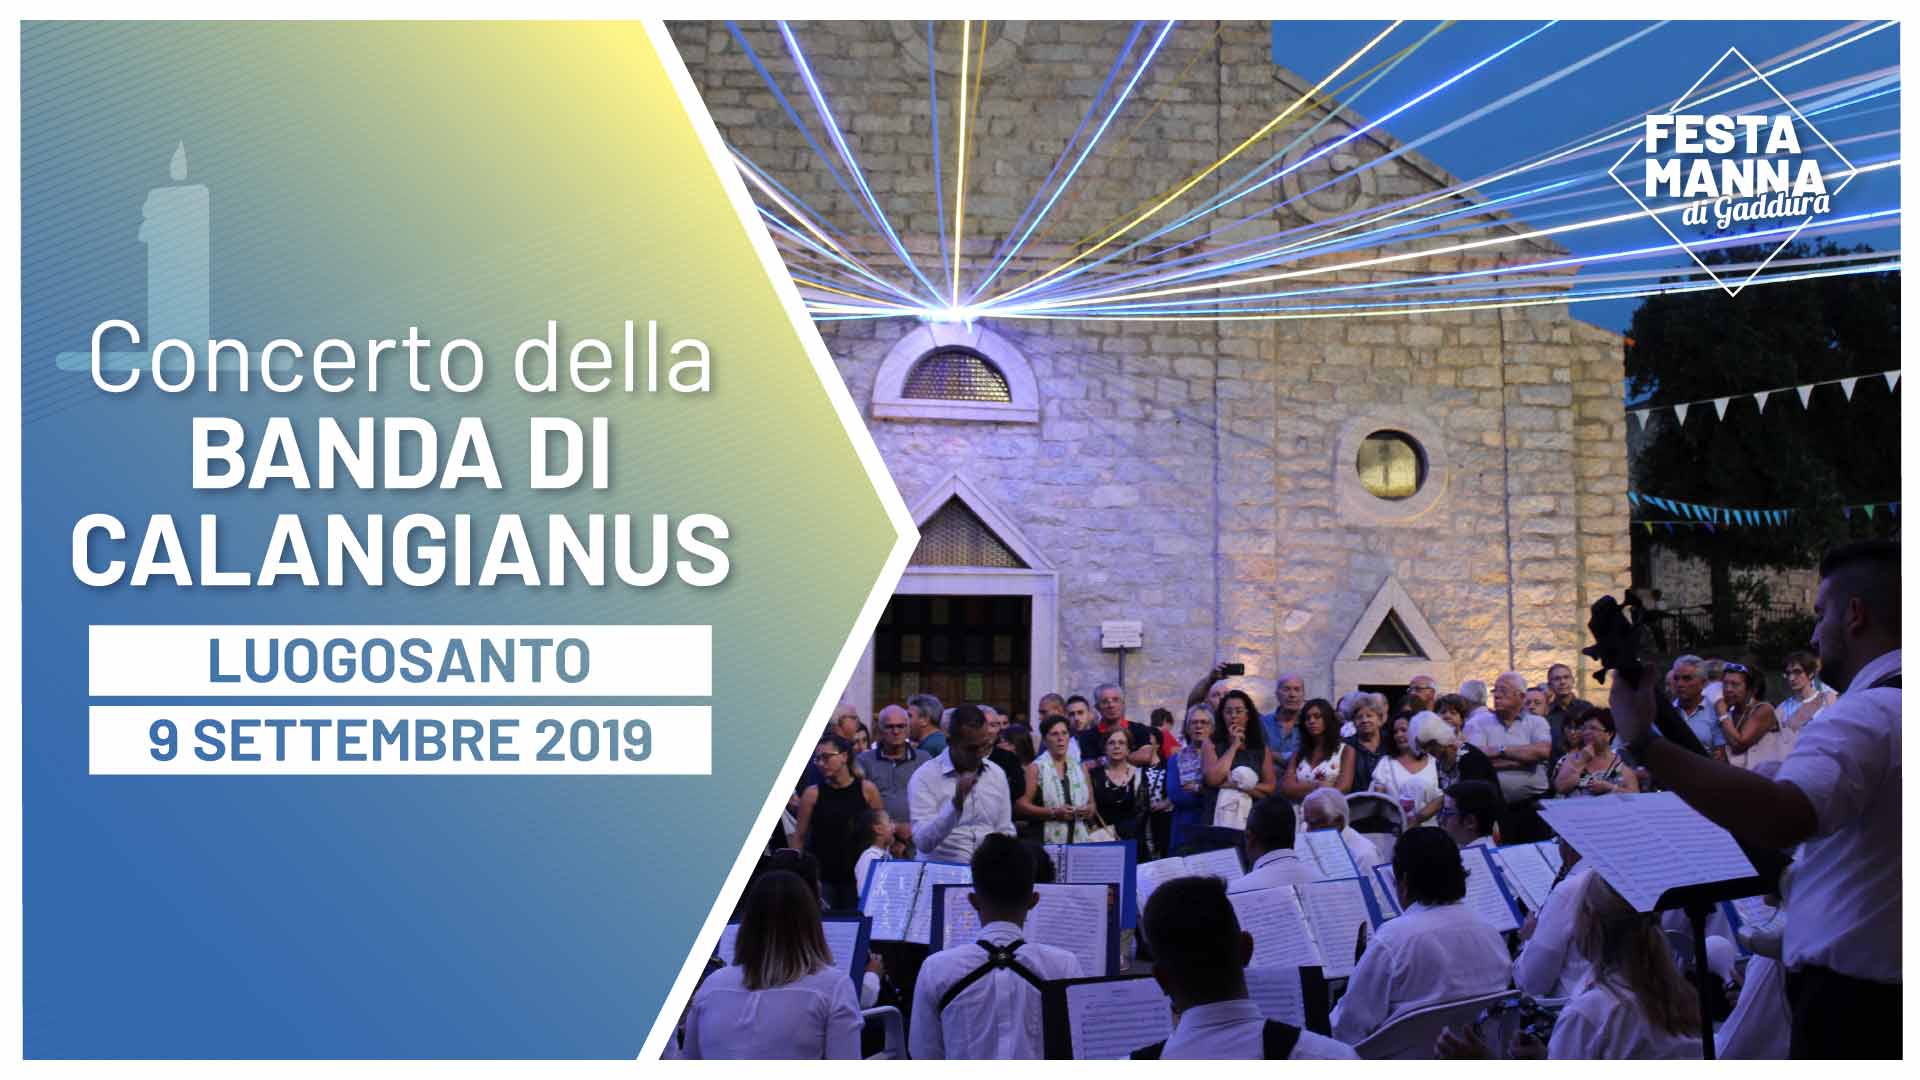 Groupe de musique Calangianus | Festa Manna di Gaddura 2019